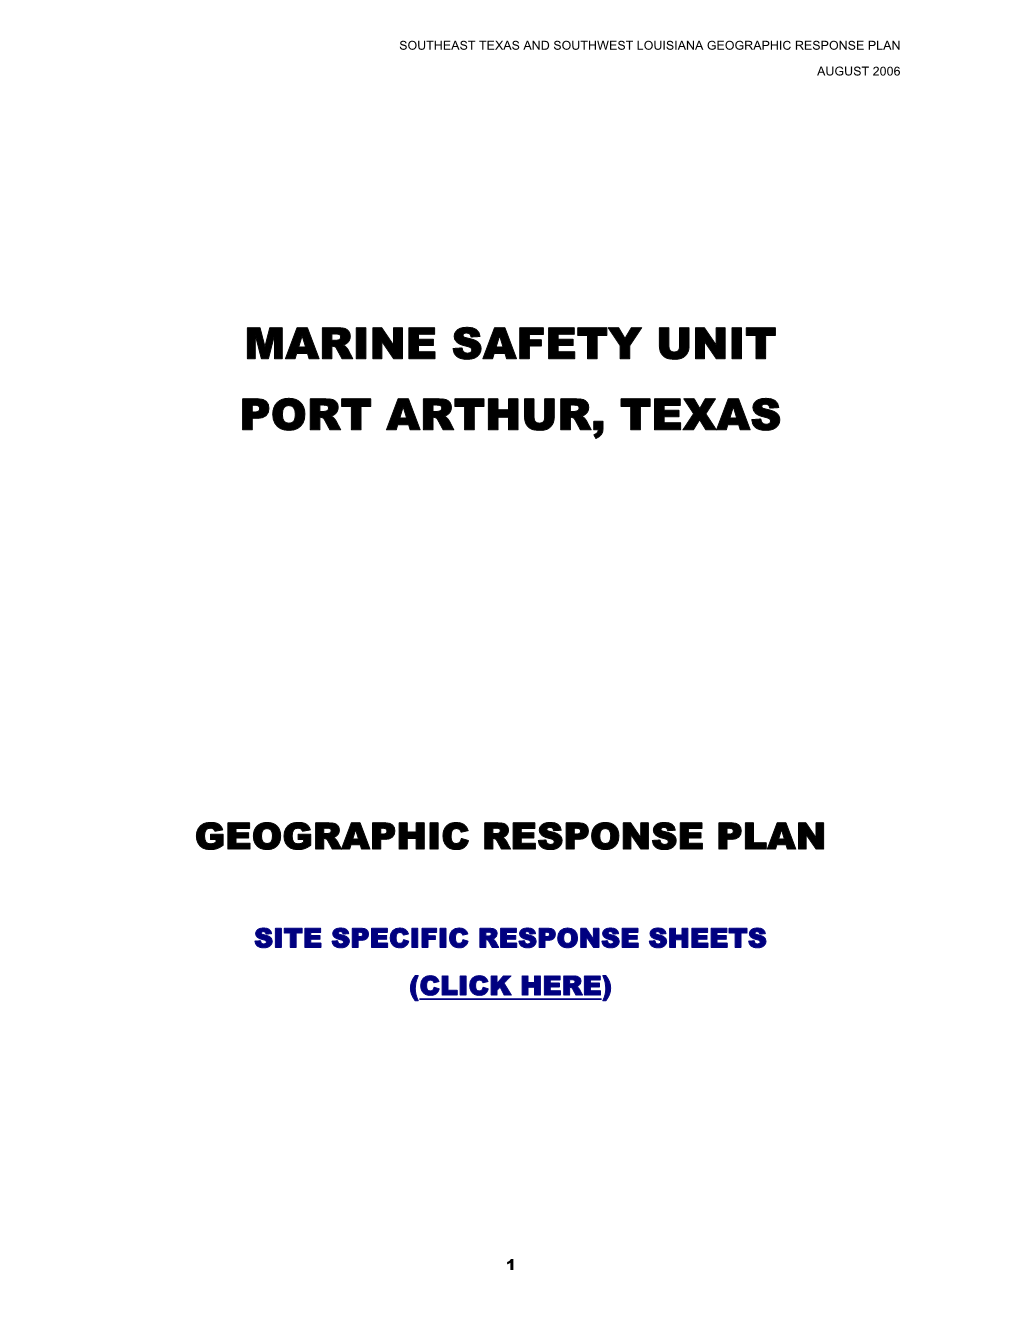 Marine Safety Unit Port Arthur, Texas